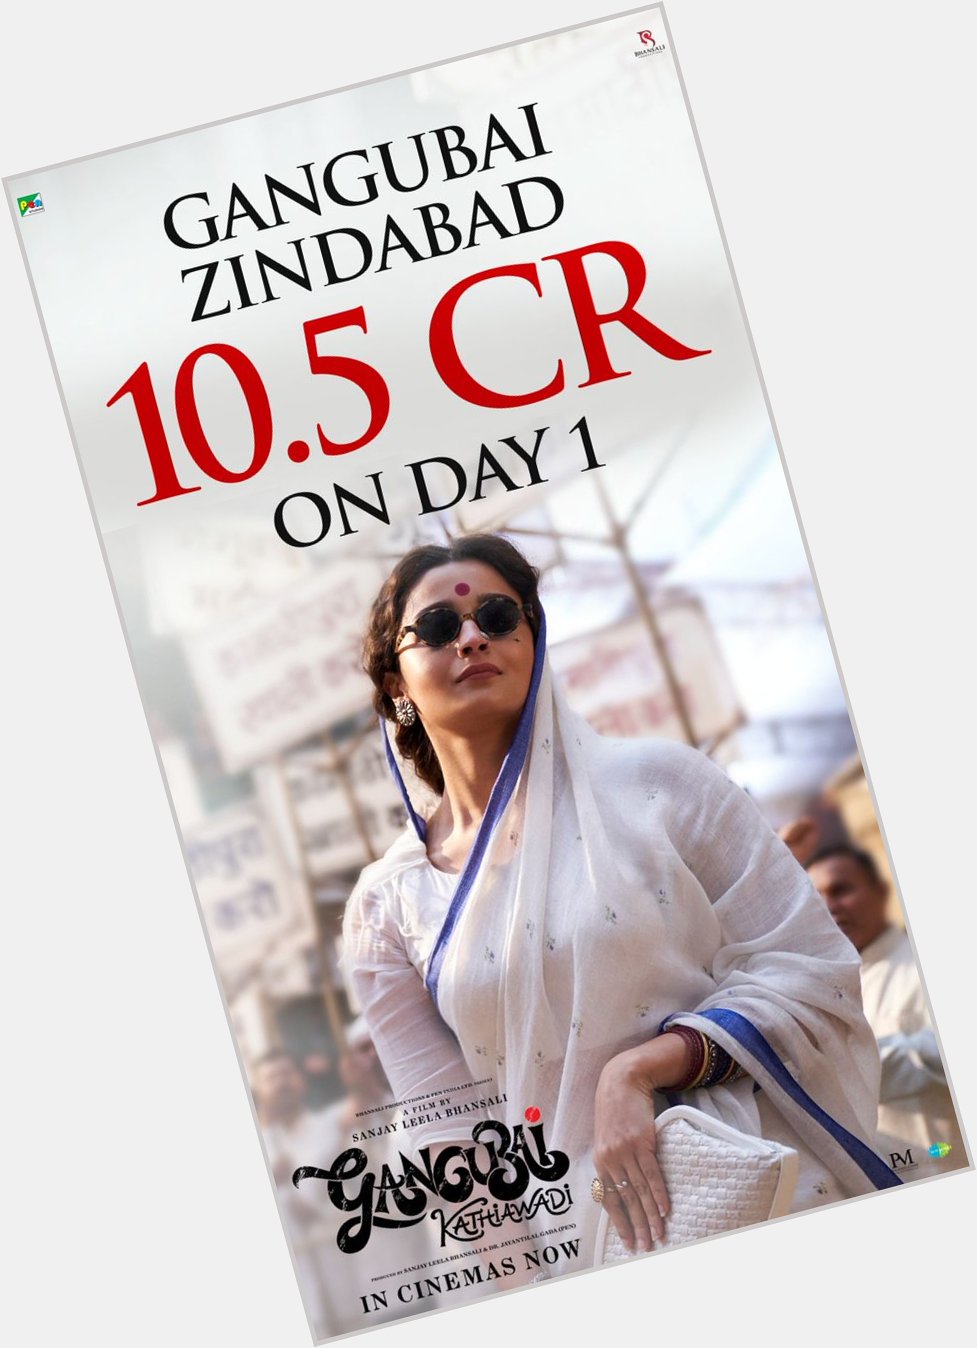 Sanjay Leela Bhansali ji did a great job in this film.  Wishing him a very happy birthday.
GANGUBAI ZINDABAD 